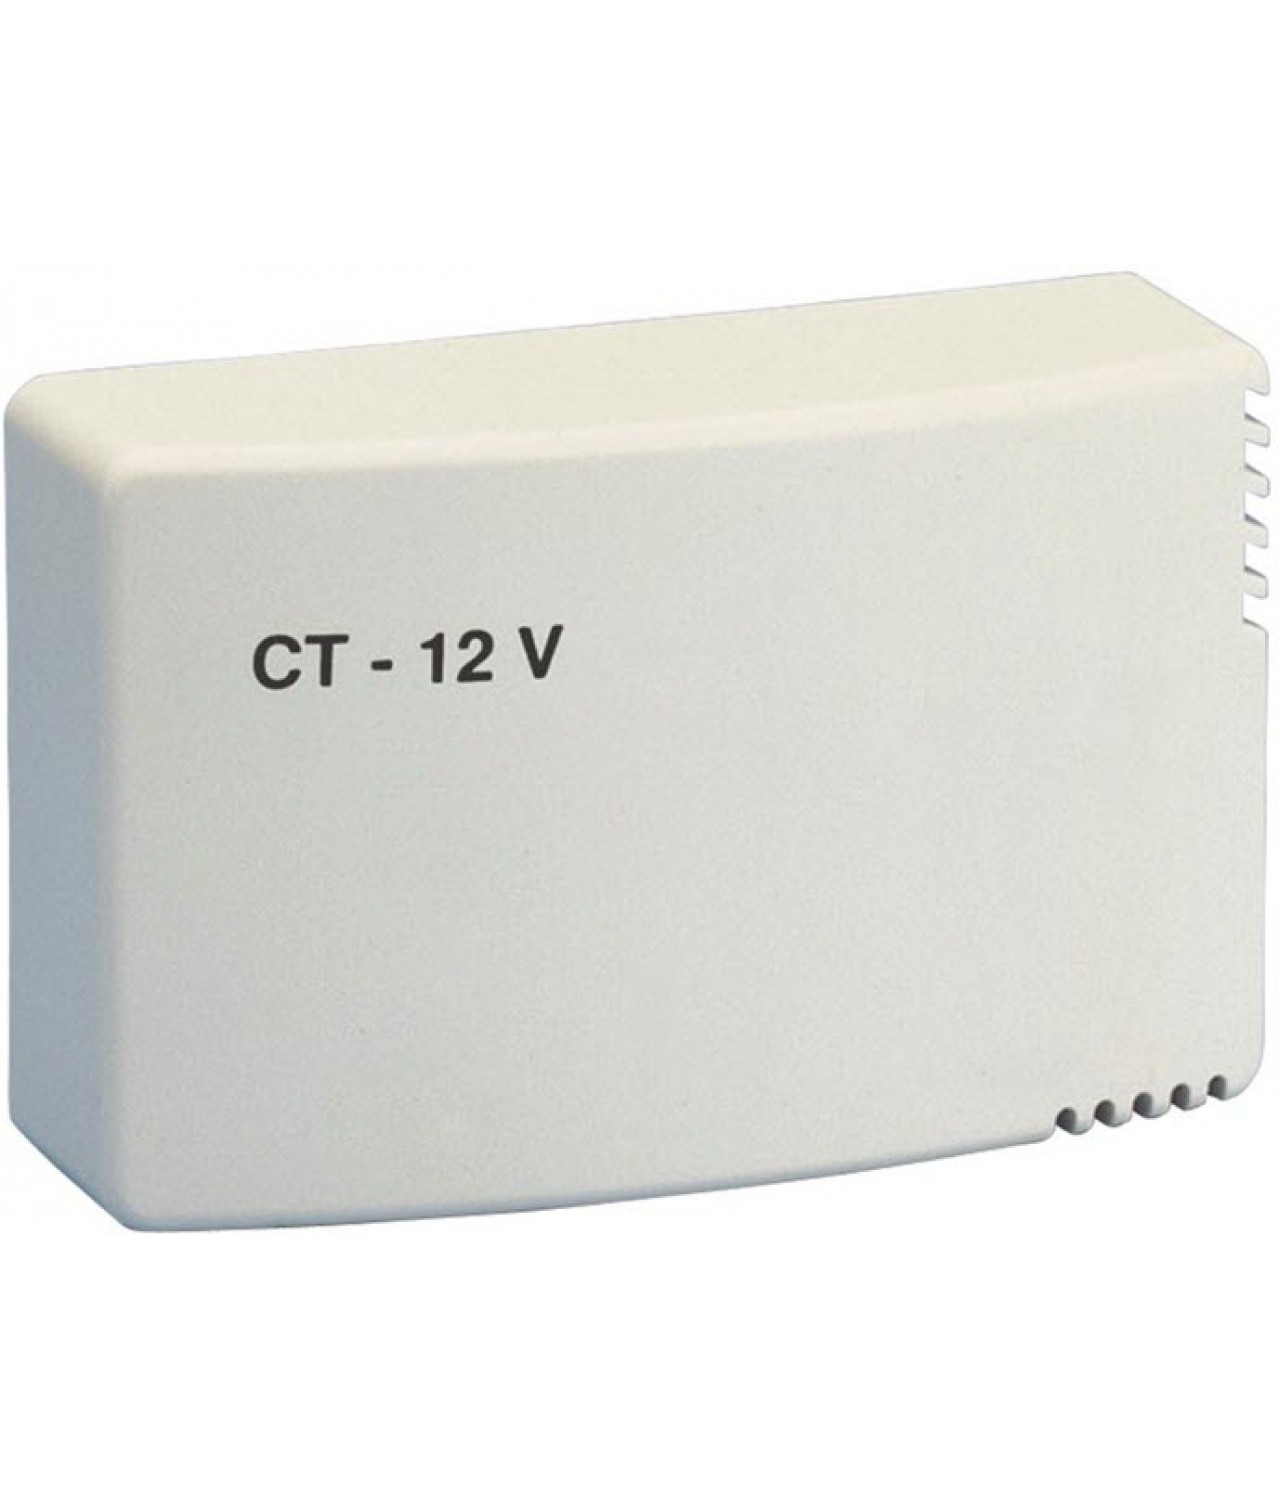 Safety isolating transformer with timer CT12/14R, 230V/12V